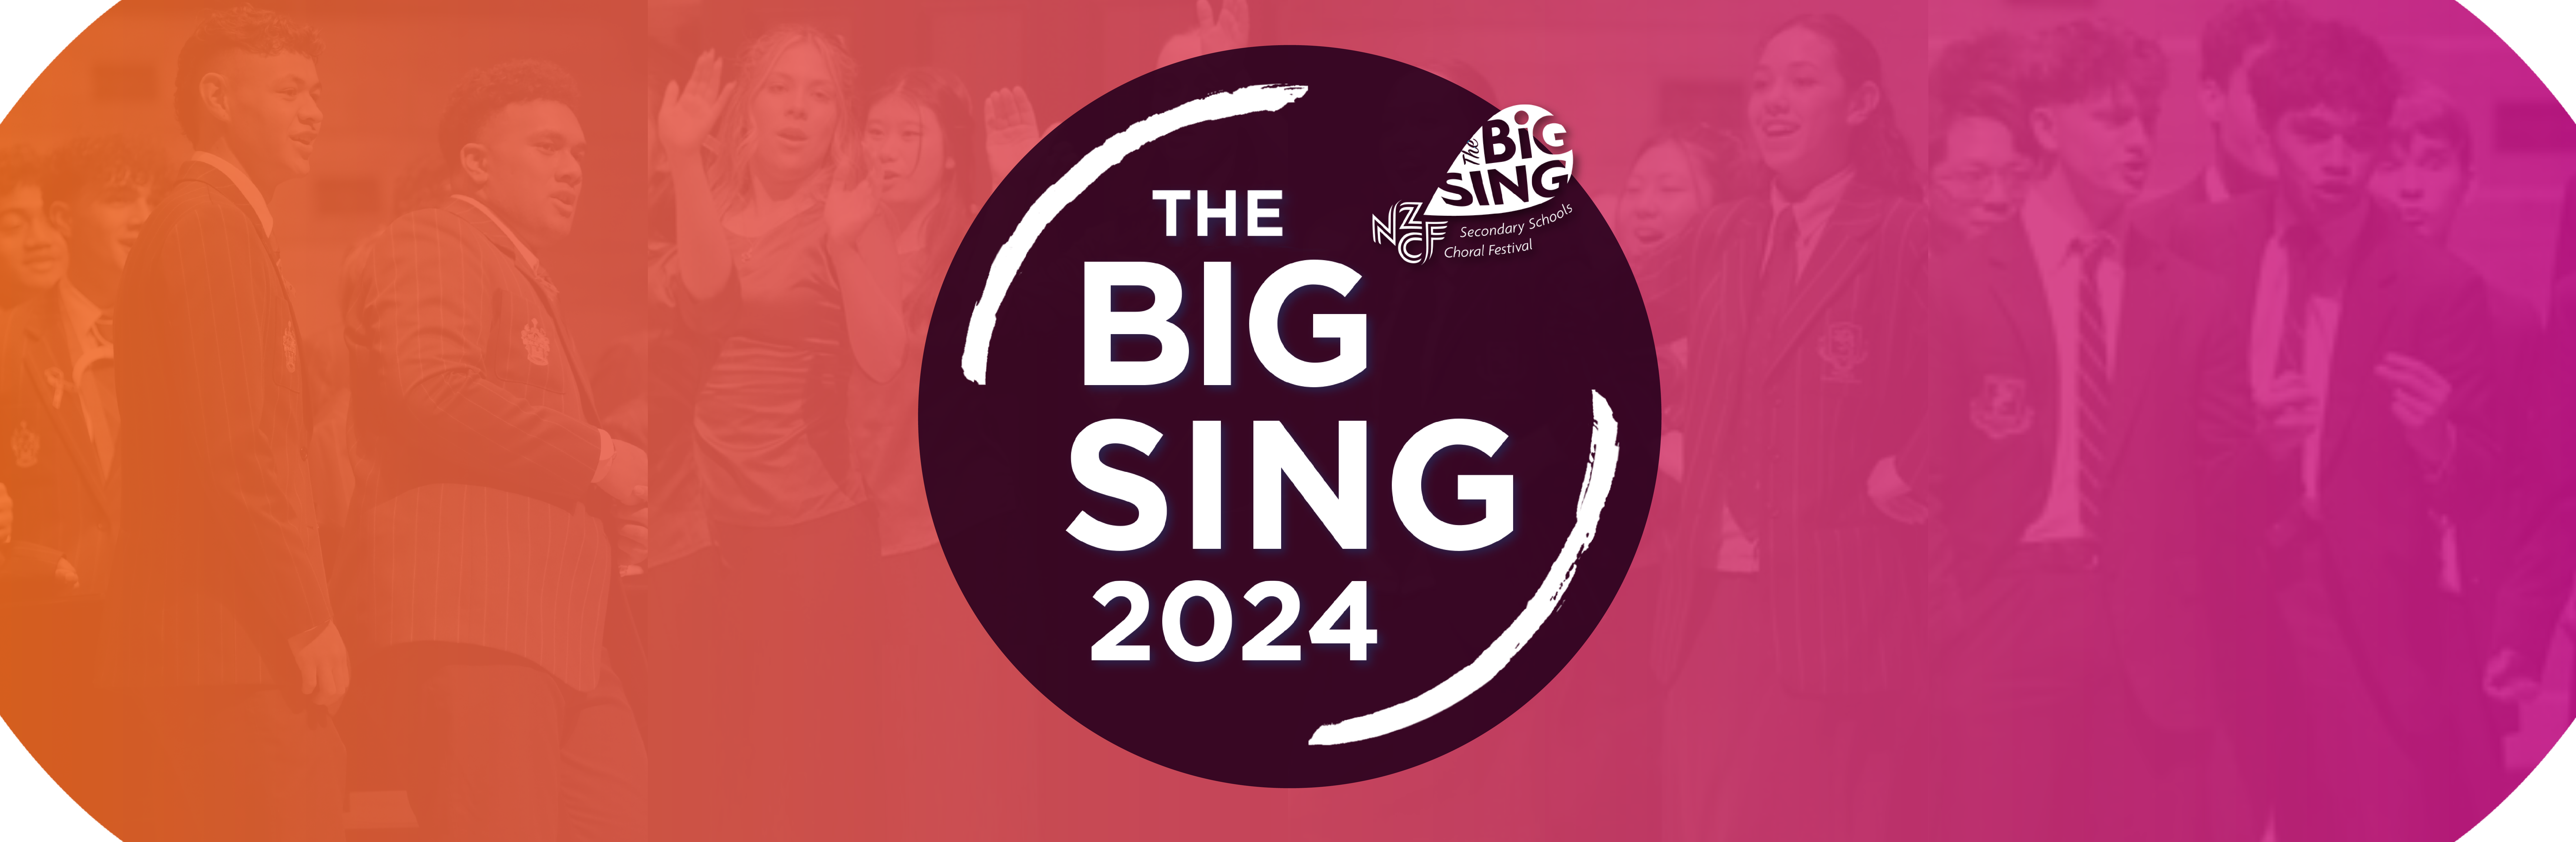 The Big Sing - Manawatu - Whanganui - Coming Soon